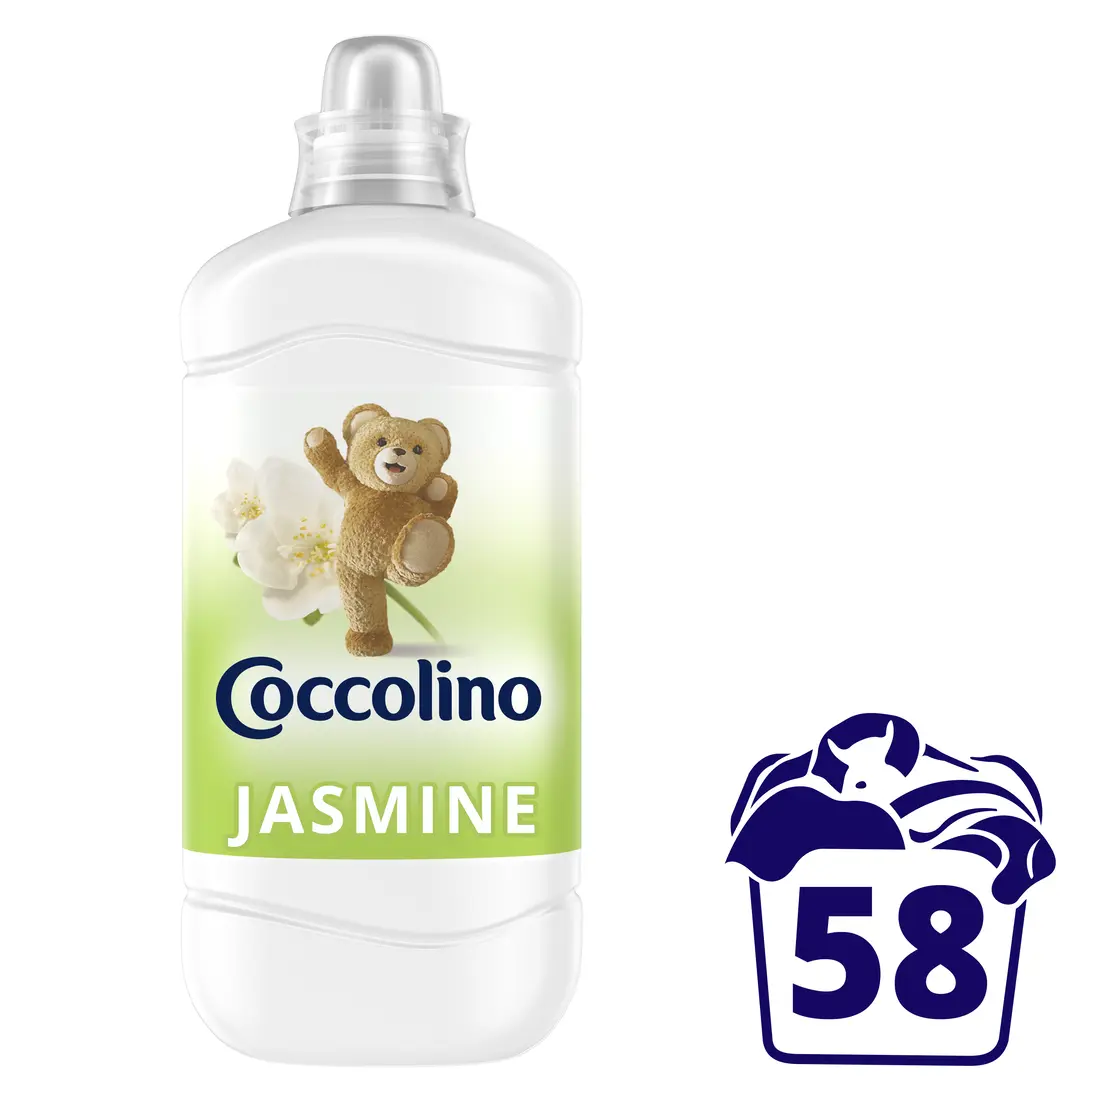 Balsam de rufe, Coccolino Jasmine, 58 spalari, 1.45L 